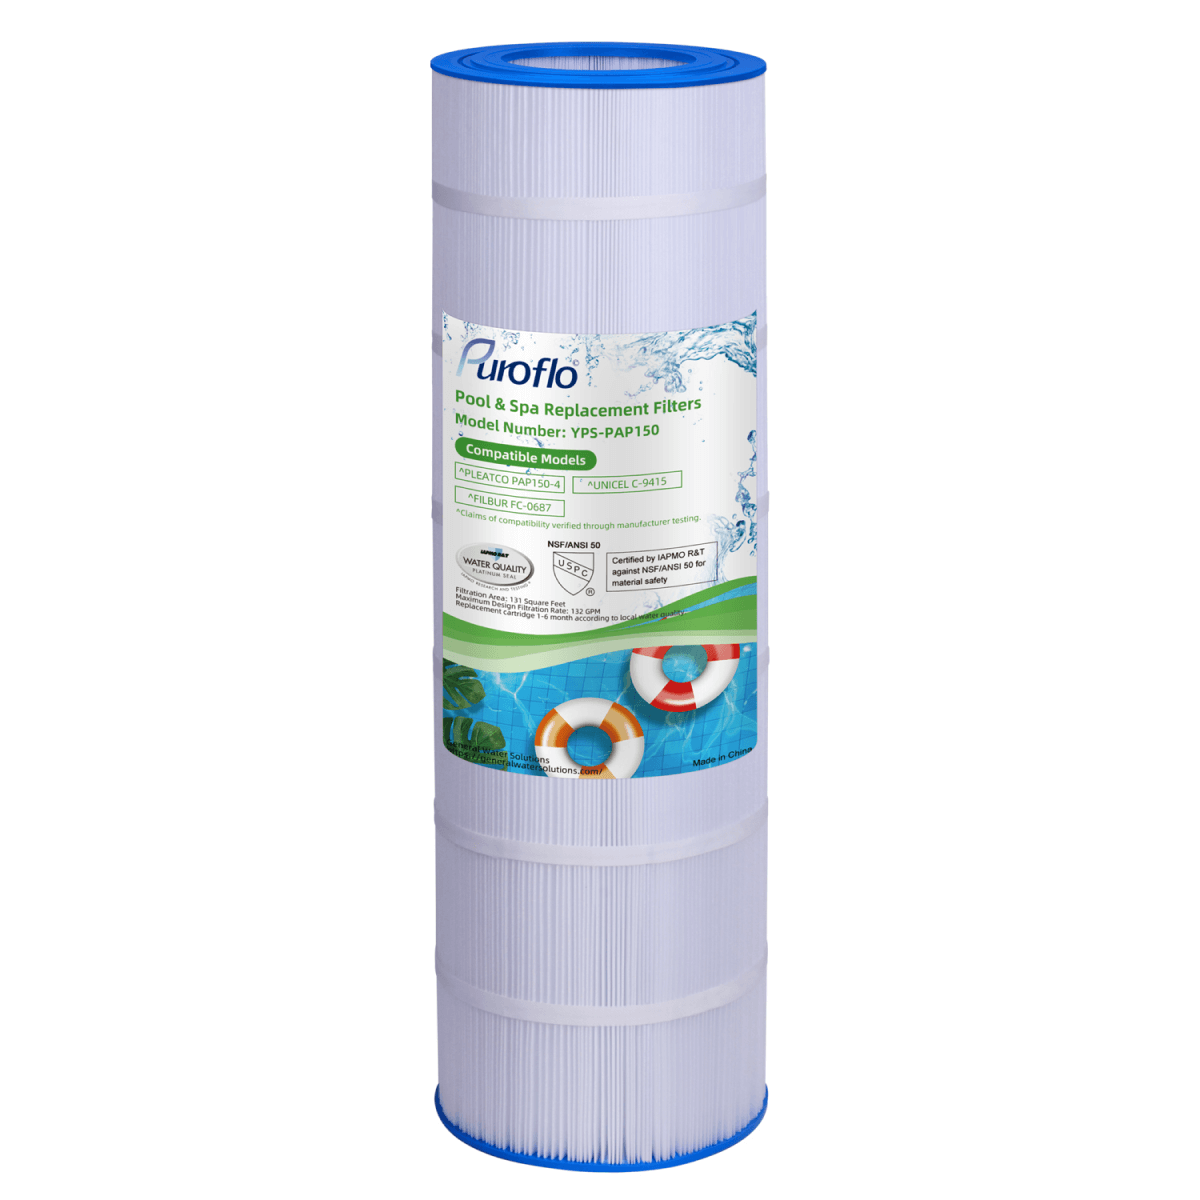 Puroflo Pool Filter Replacement for Pleatco PAP150-4, Unicel C-9415, Filbur FC-0687 (1 Pack)